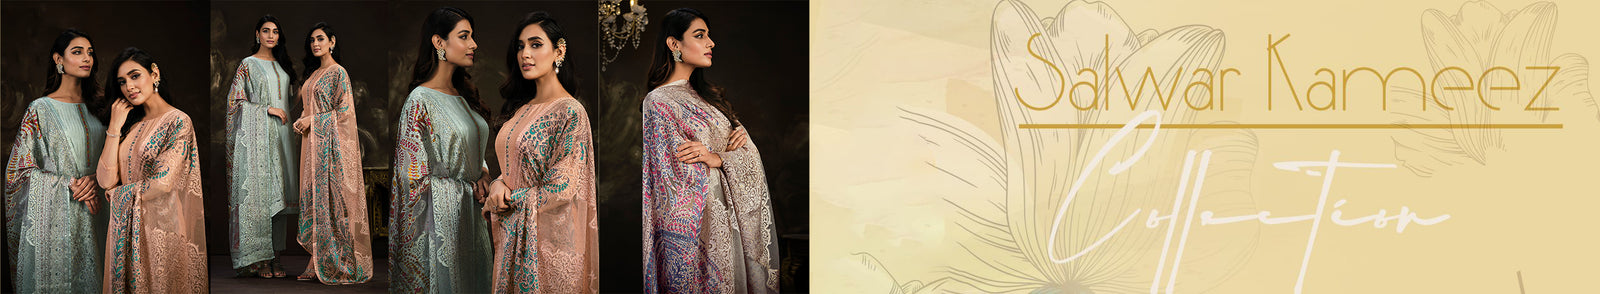 Buy Indian Designer Salwar Suits for Weddings Online in USA, UK, Canada & Worldwide